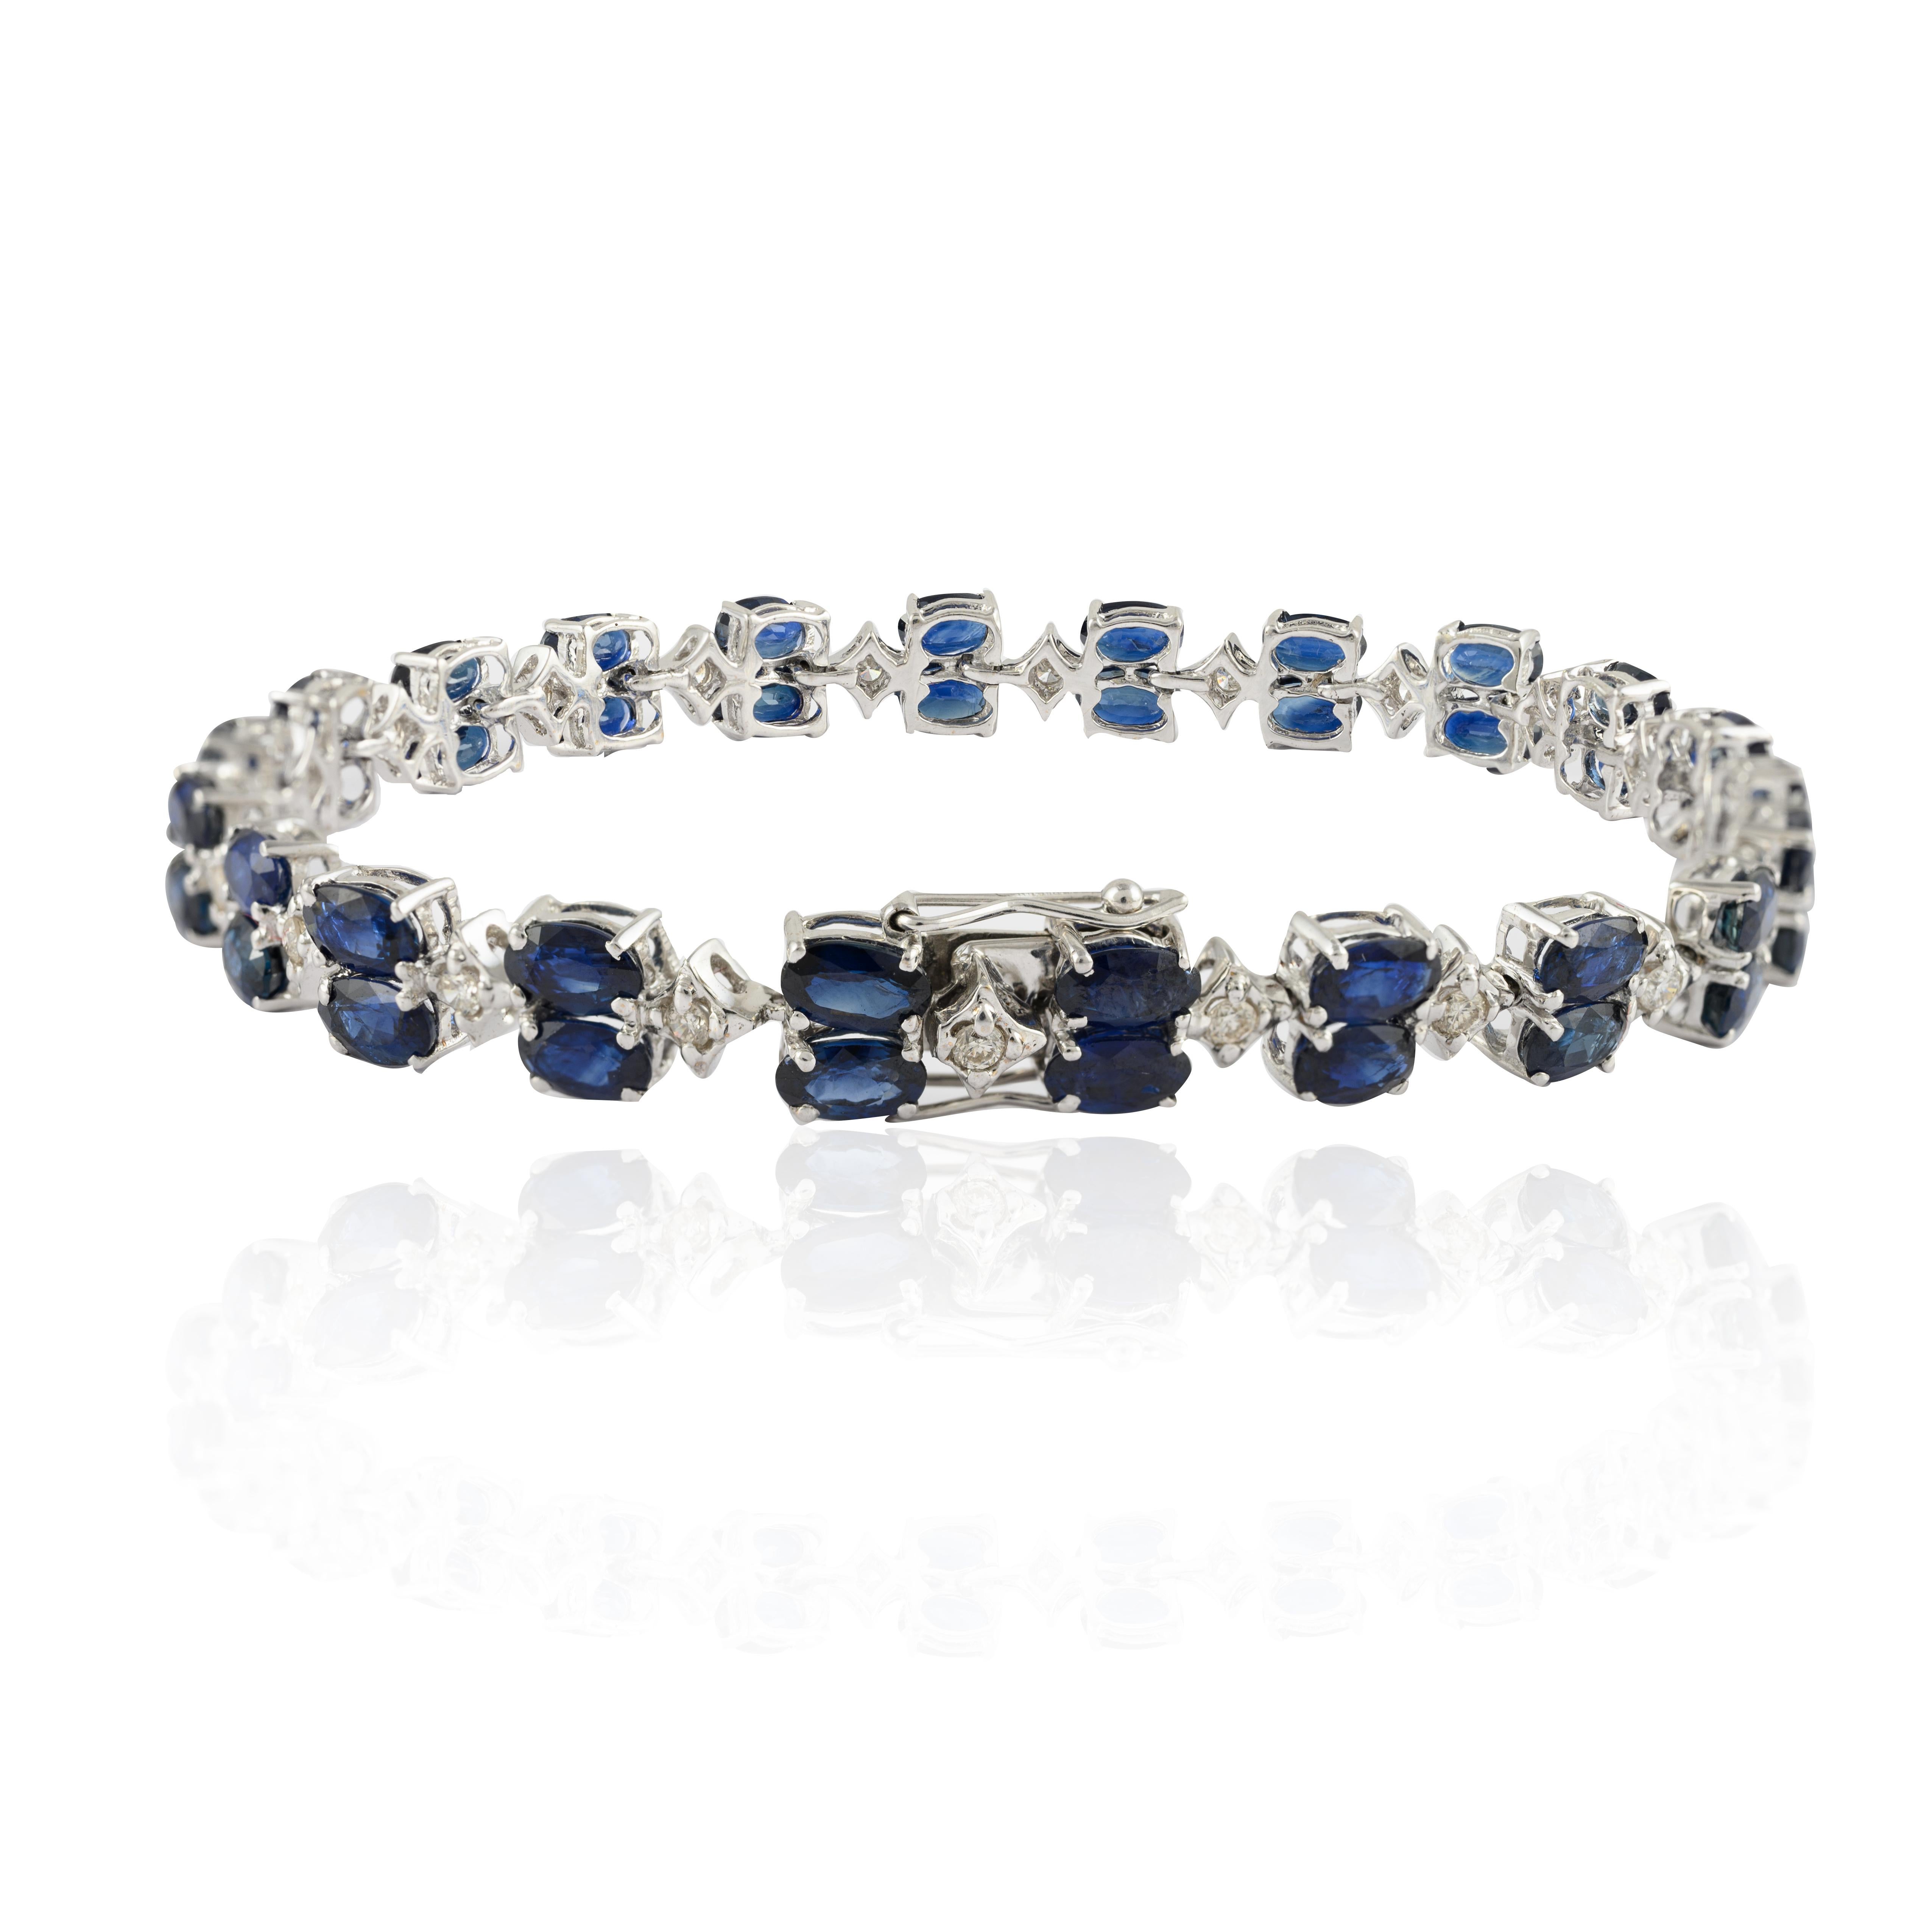 Oval Cut 14.37 Carat Blue Sapphire Diamond 14k Solid White Gold Wedding Bracelet For Sale